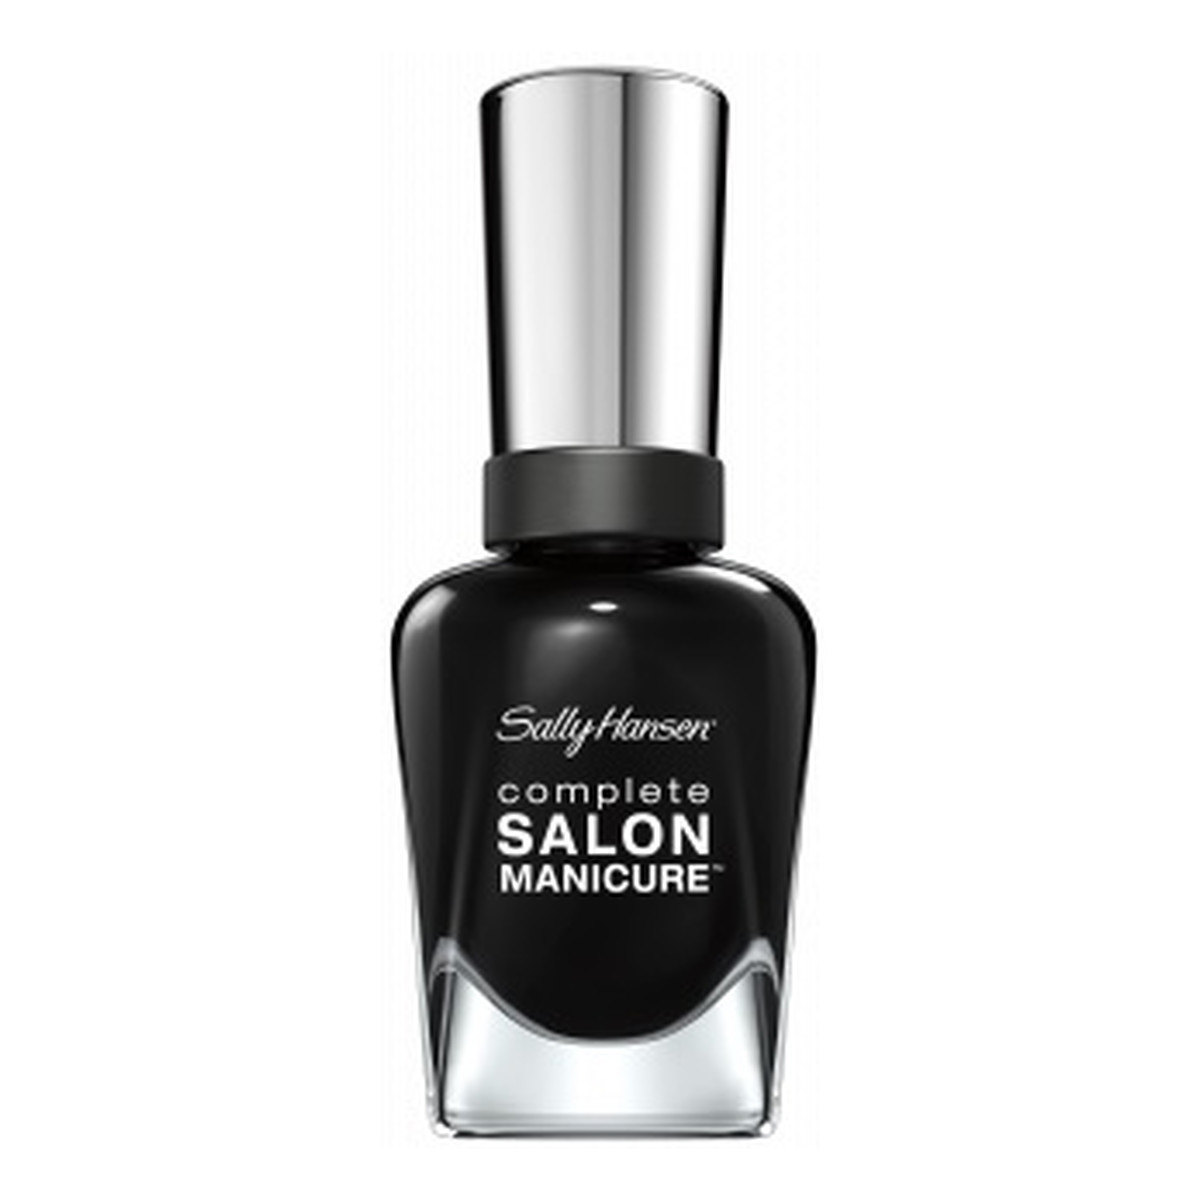 Sally Hansen Complete Salon Manicure Lakier Do Paznokci 15ml